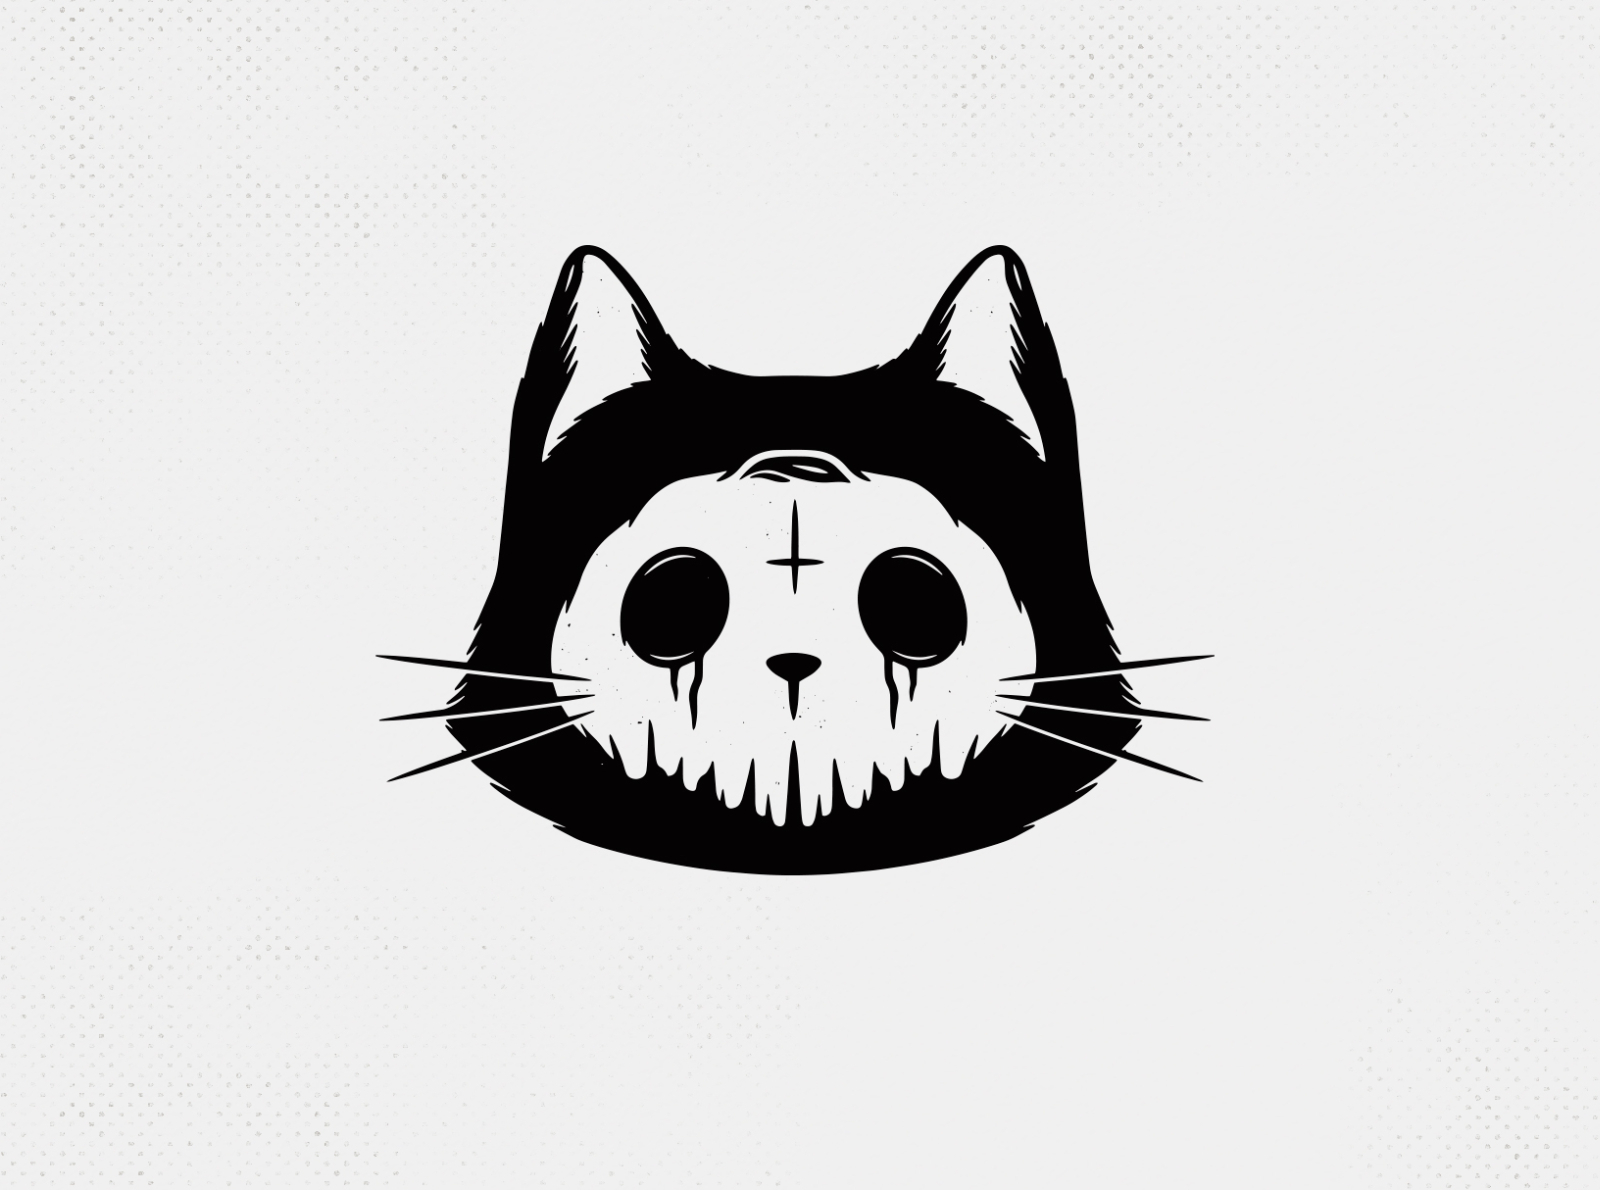 Skull Cat Halloween Logo Template by Alberto Bernabe on Dribbble